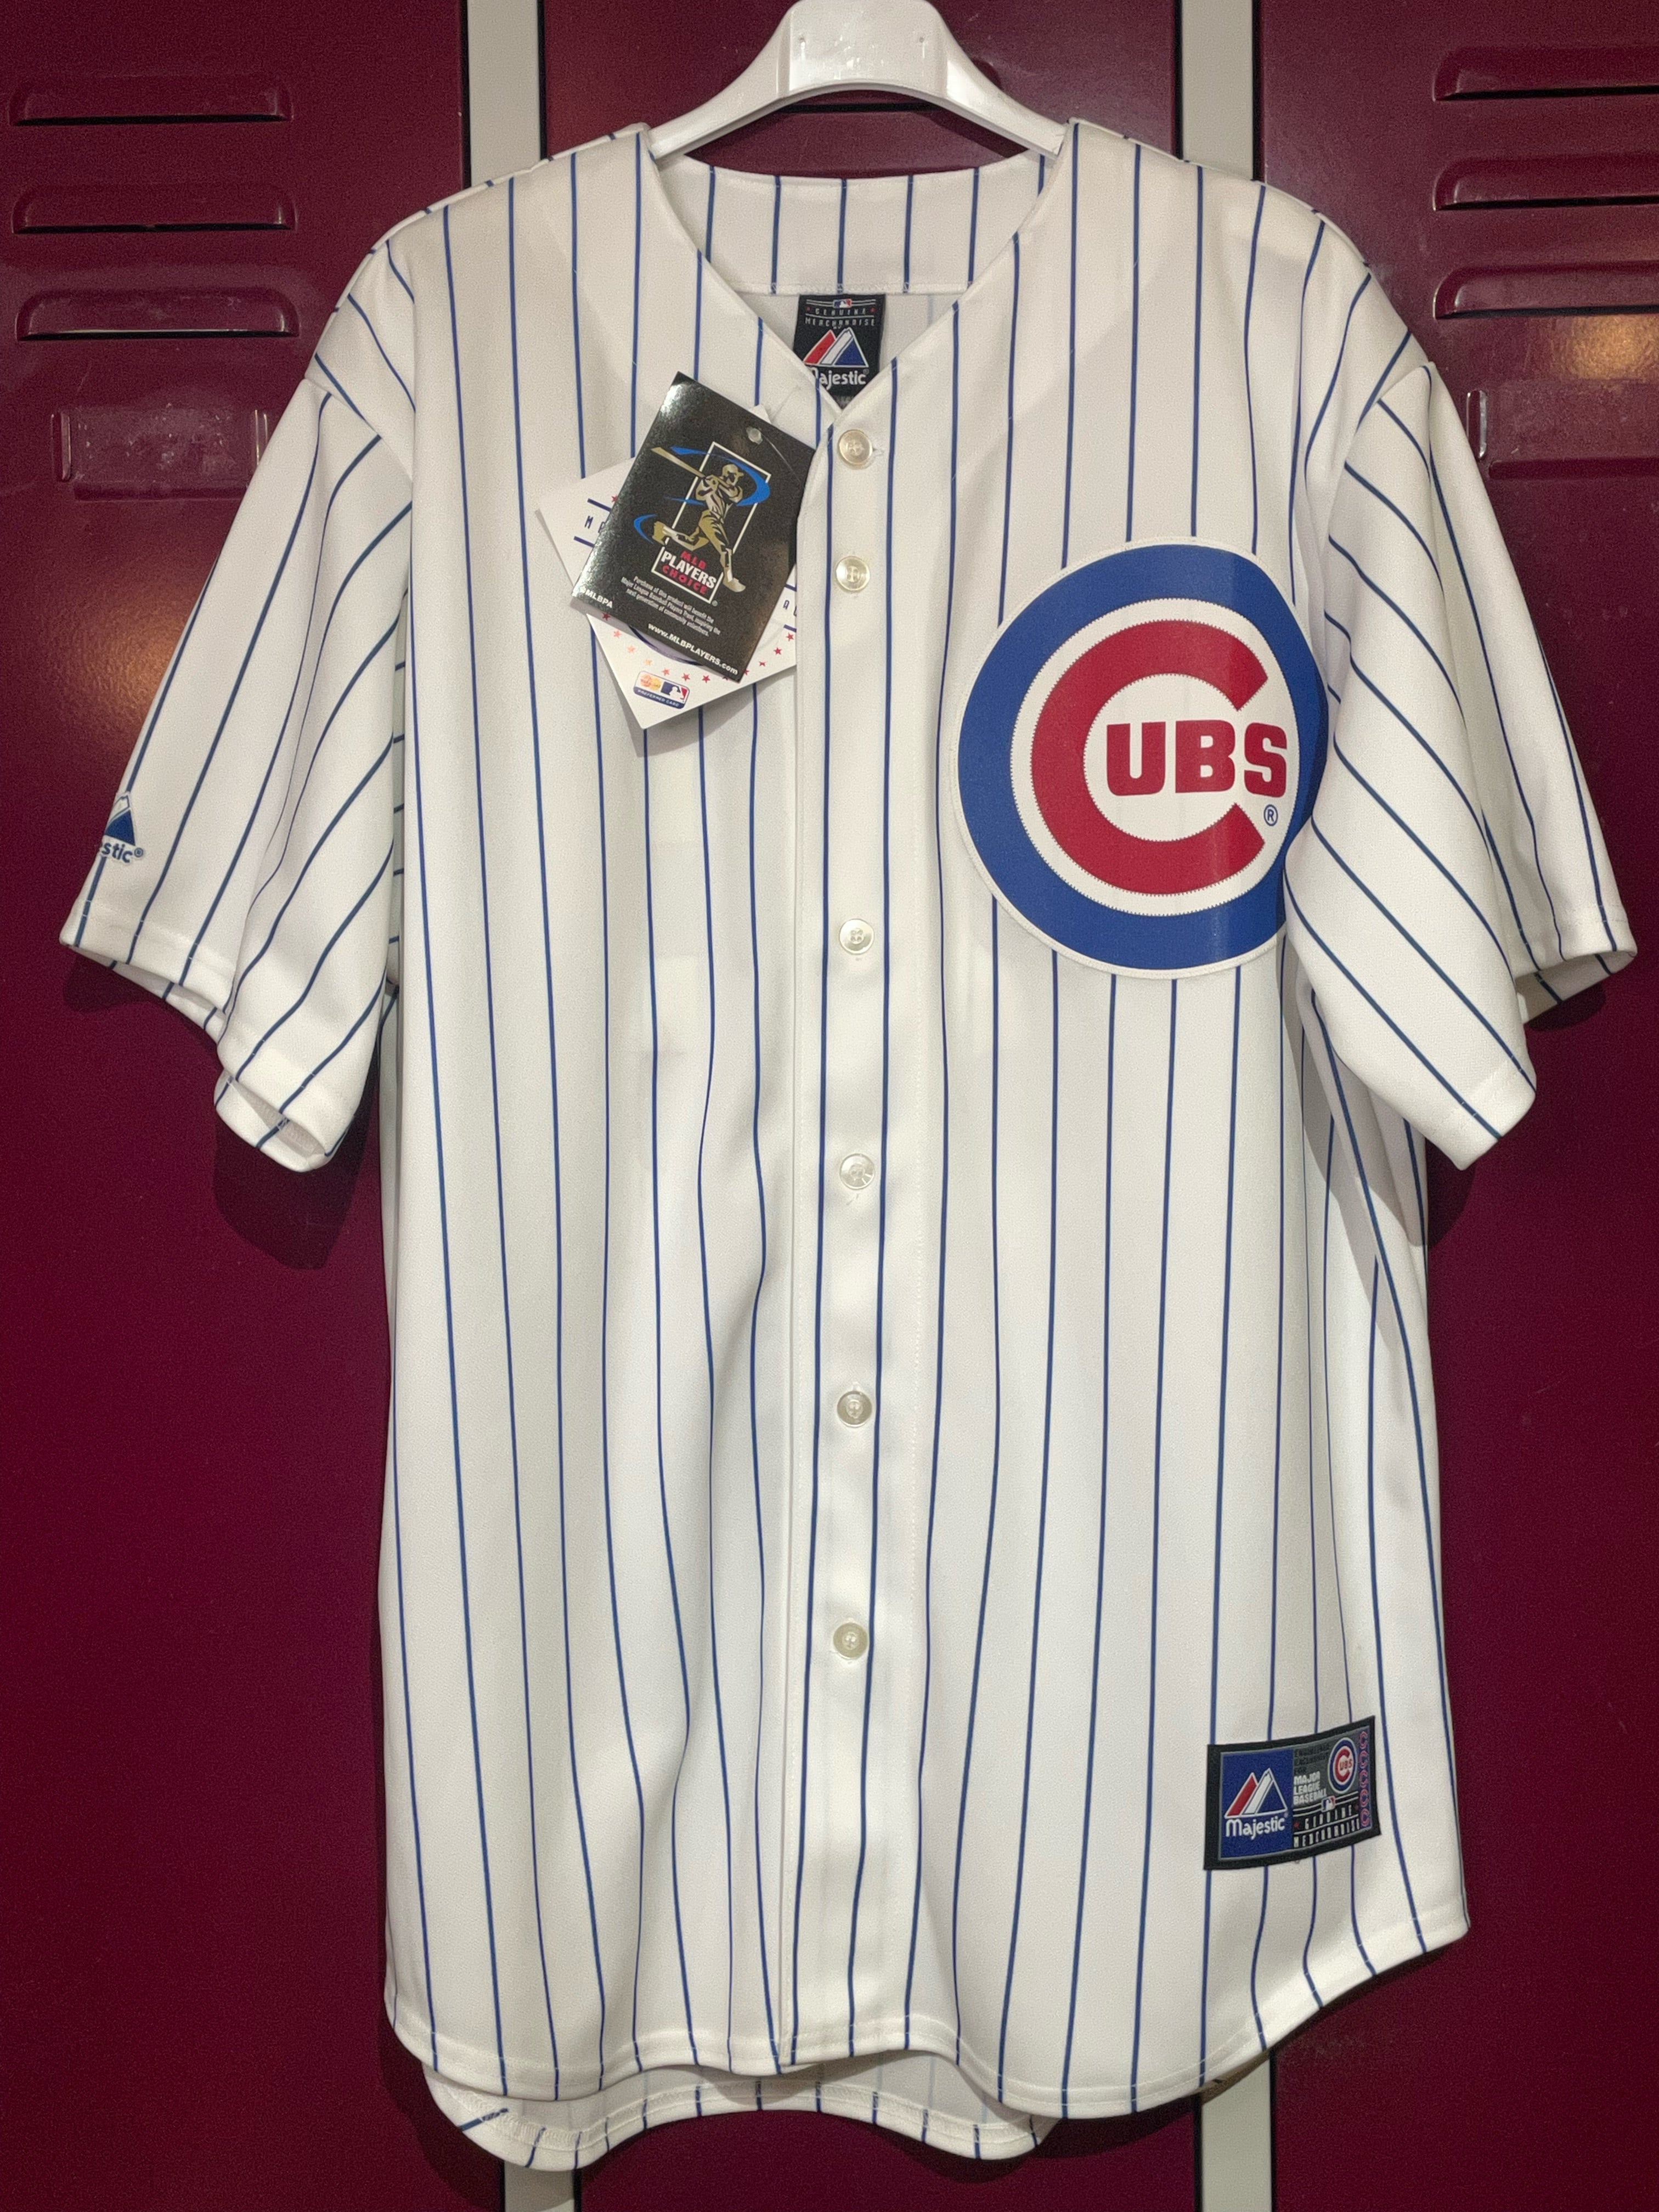 Big Z Zambrano Chicago Cubs Jersey $50 shipped #eltoro #bigz